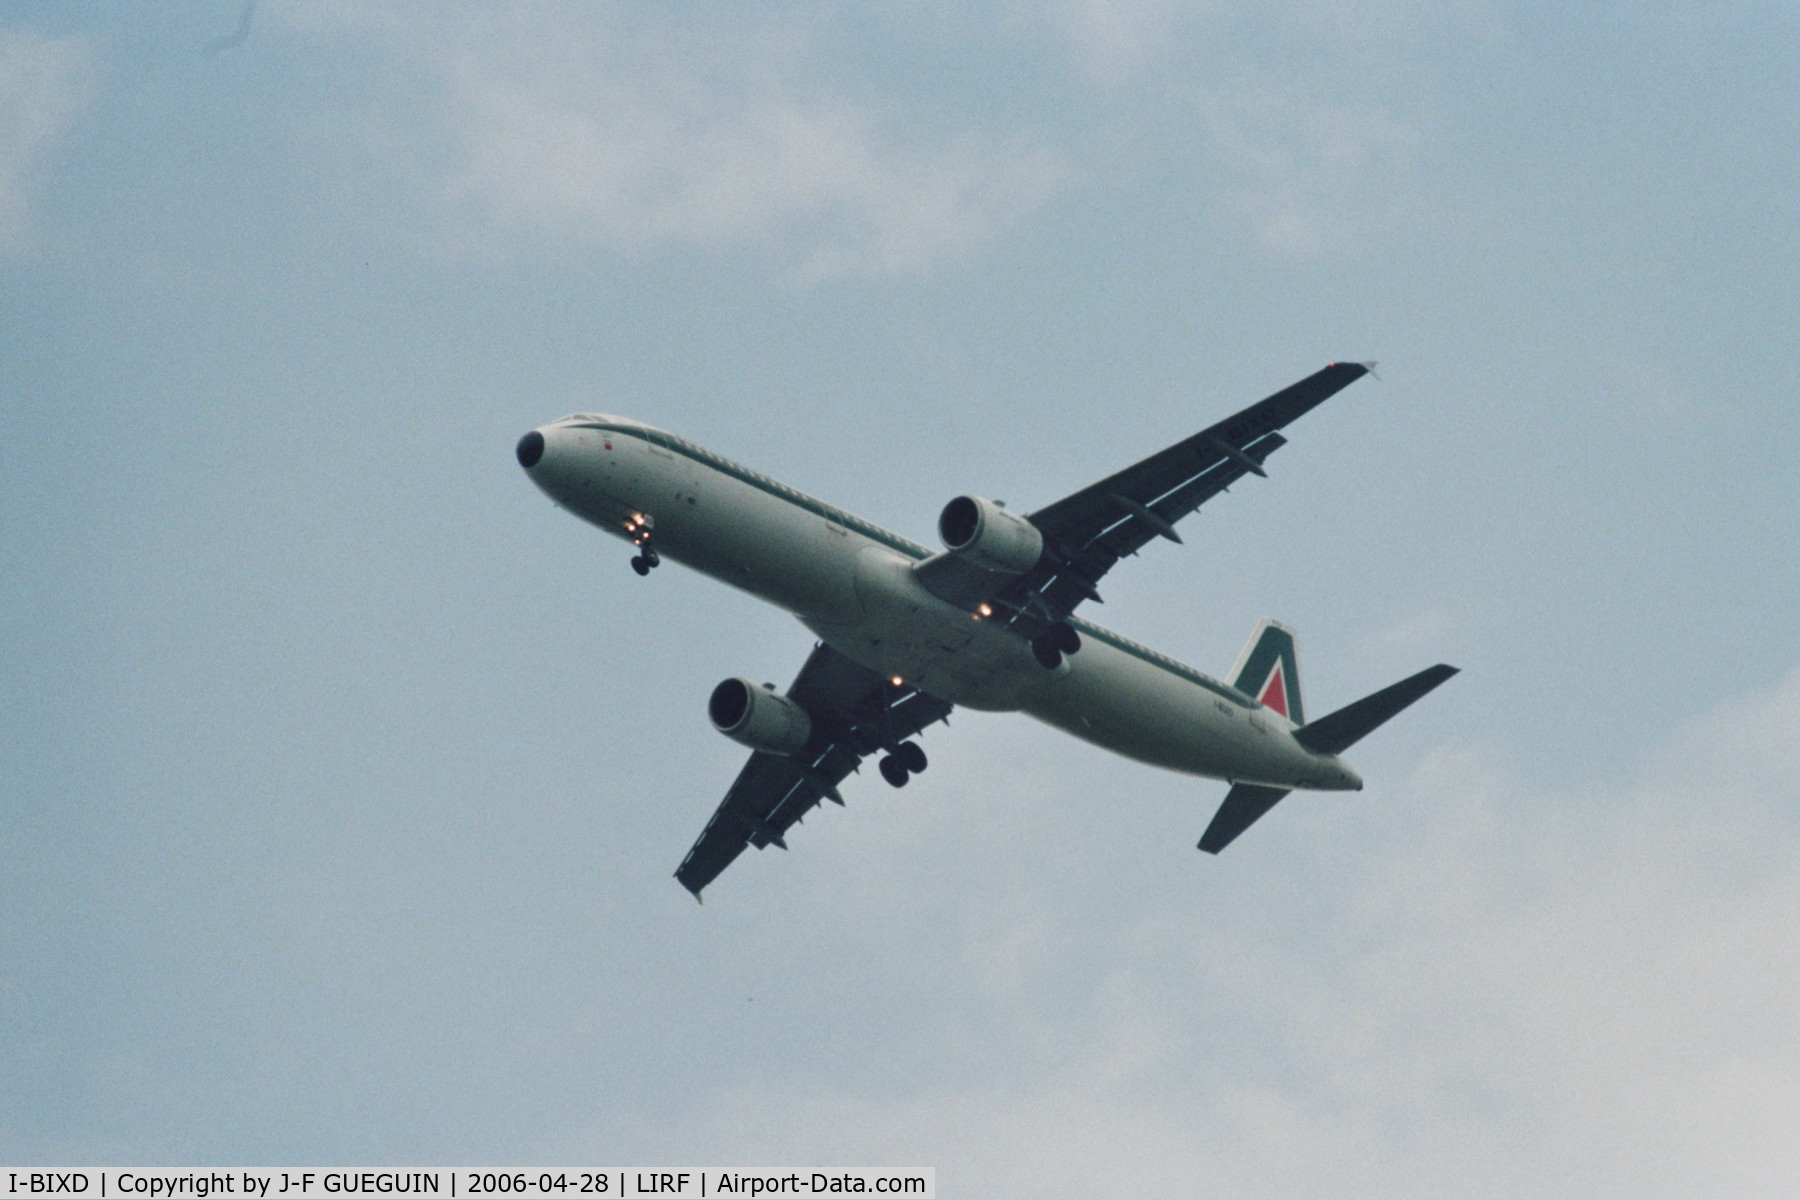 I-BIXD, 1995 Airbus A321-112 C/N 532, I-BIXD preparing her landing at Roma-Fiumicino (Leonardo da Vinci) airport.